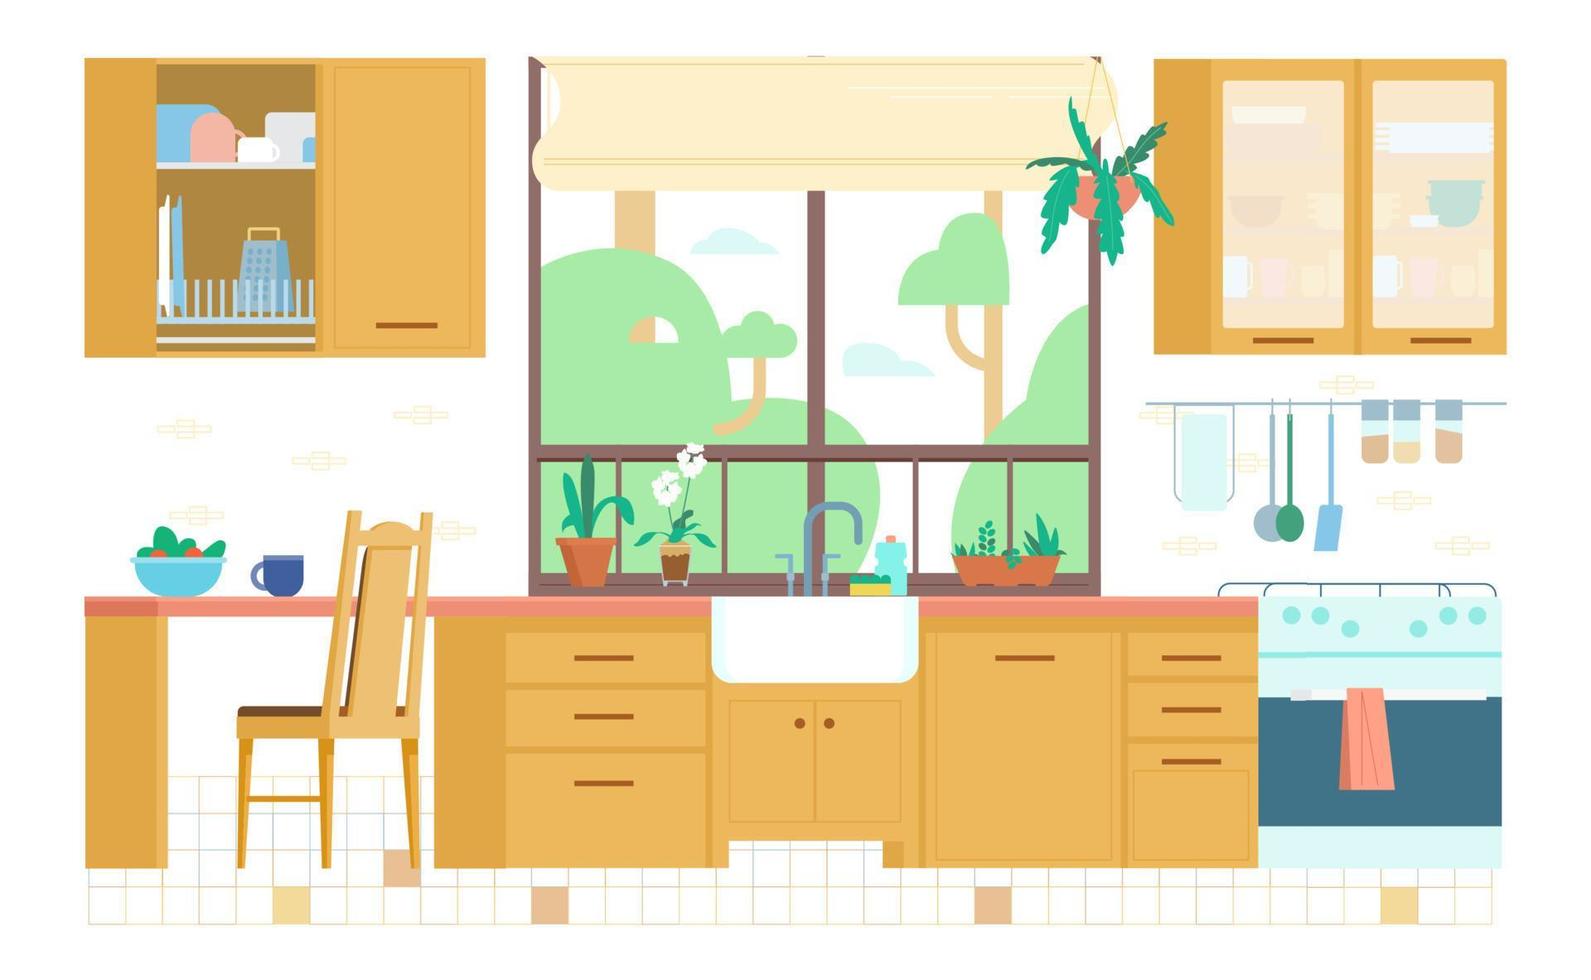 Kitchen Interior Flat Vector Illustration. Wooden Furniture, Window, Plants, Stove, Utensils, Shelfs, Sink, Plate Rack.